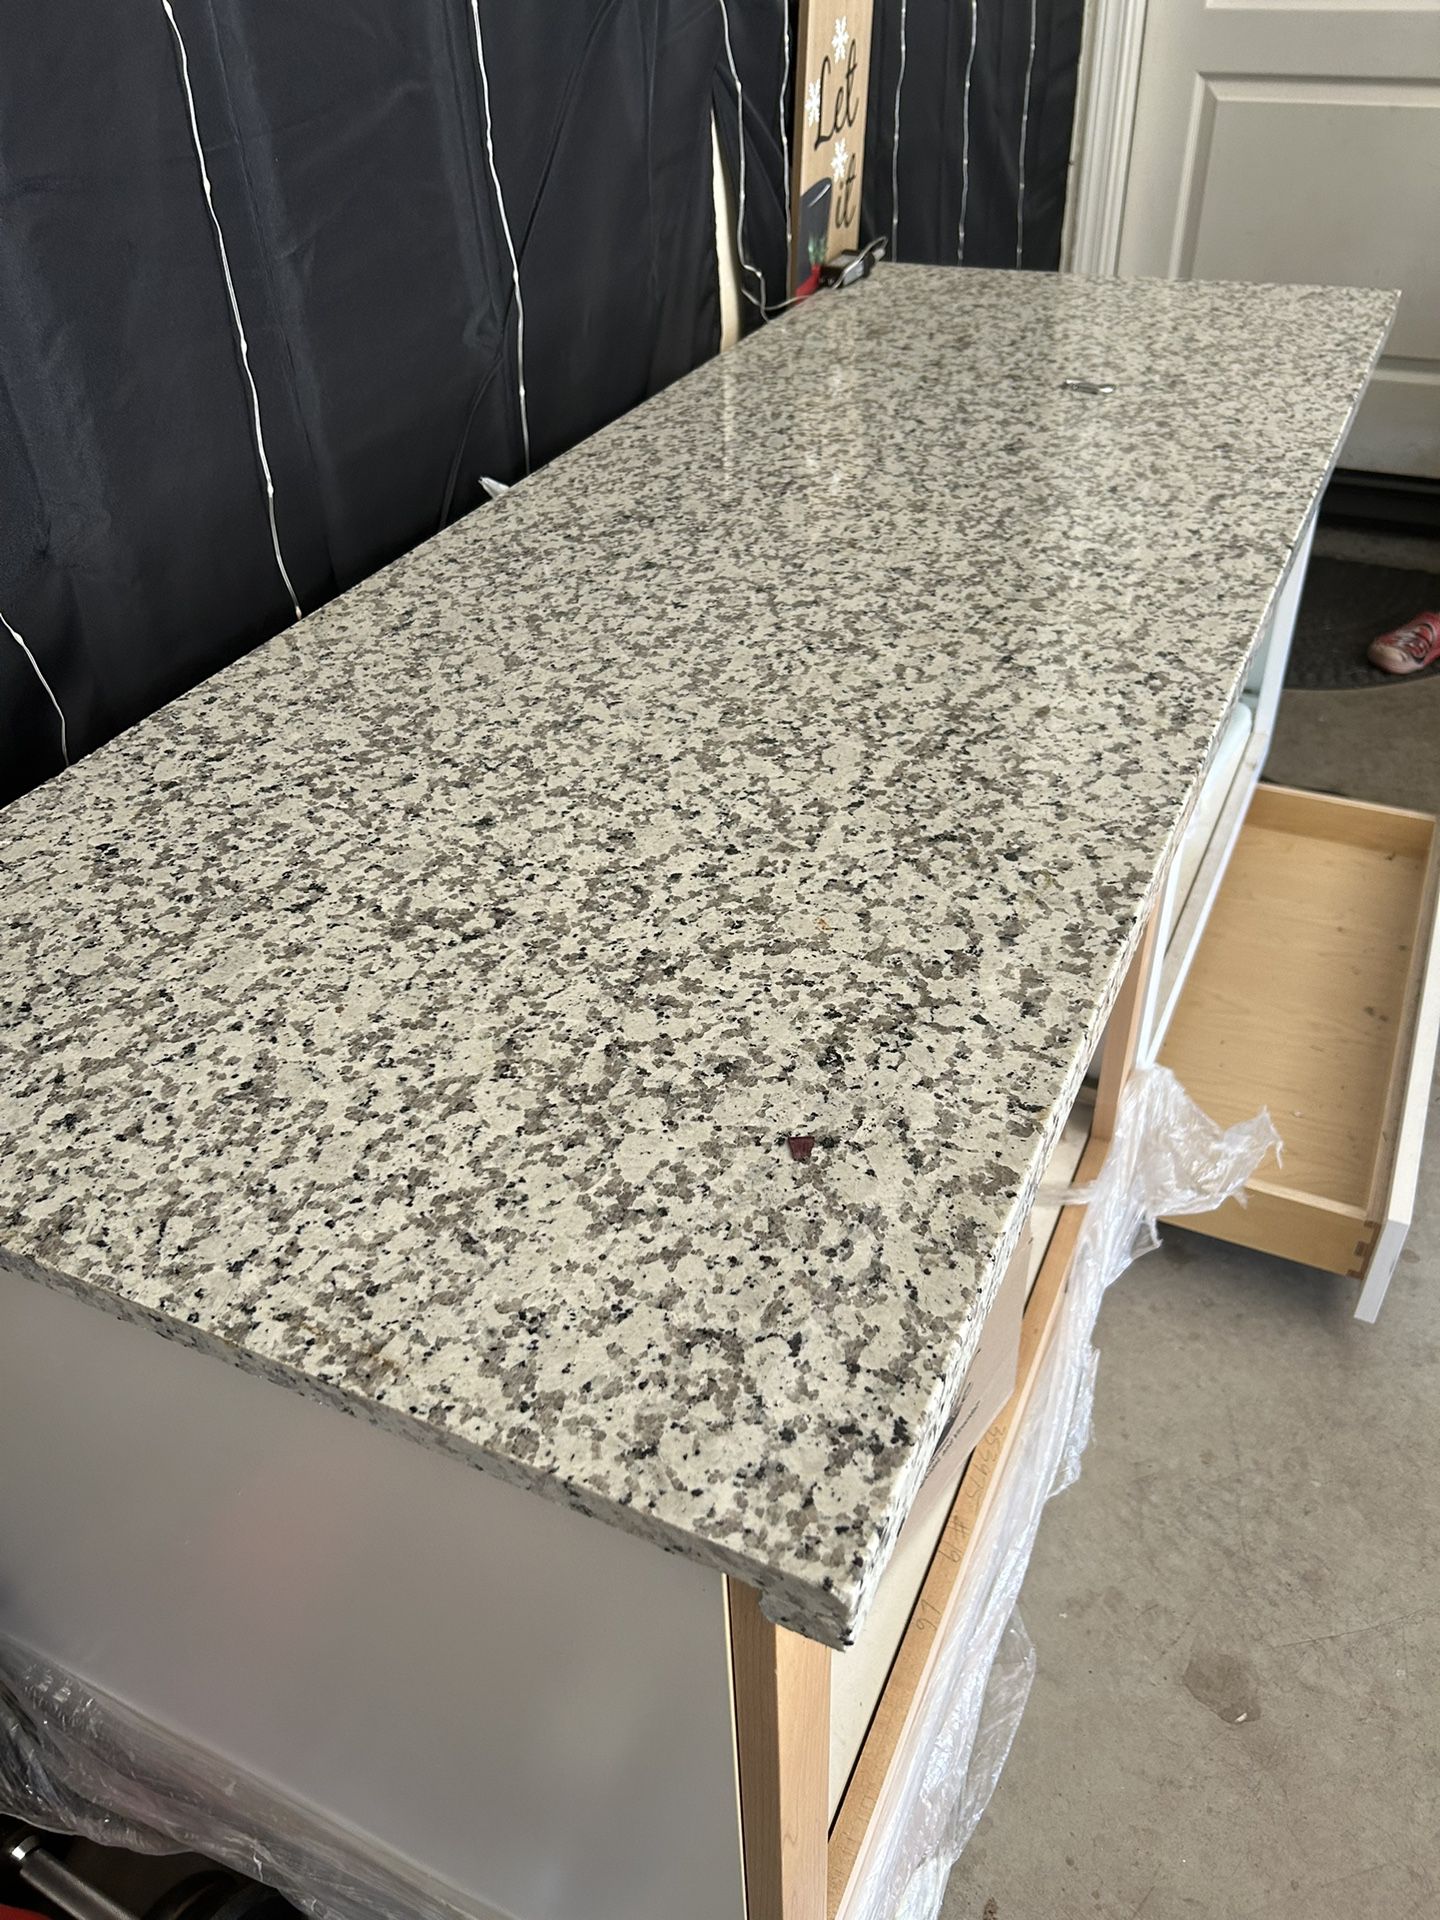 Granite Counter With Storage